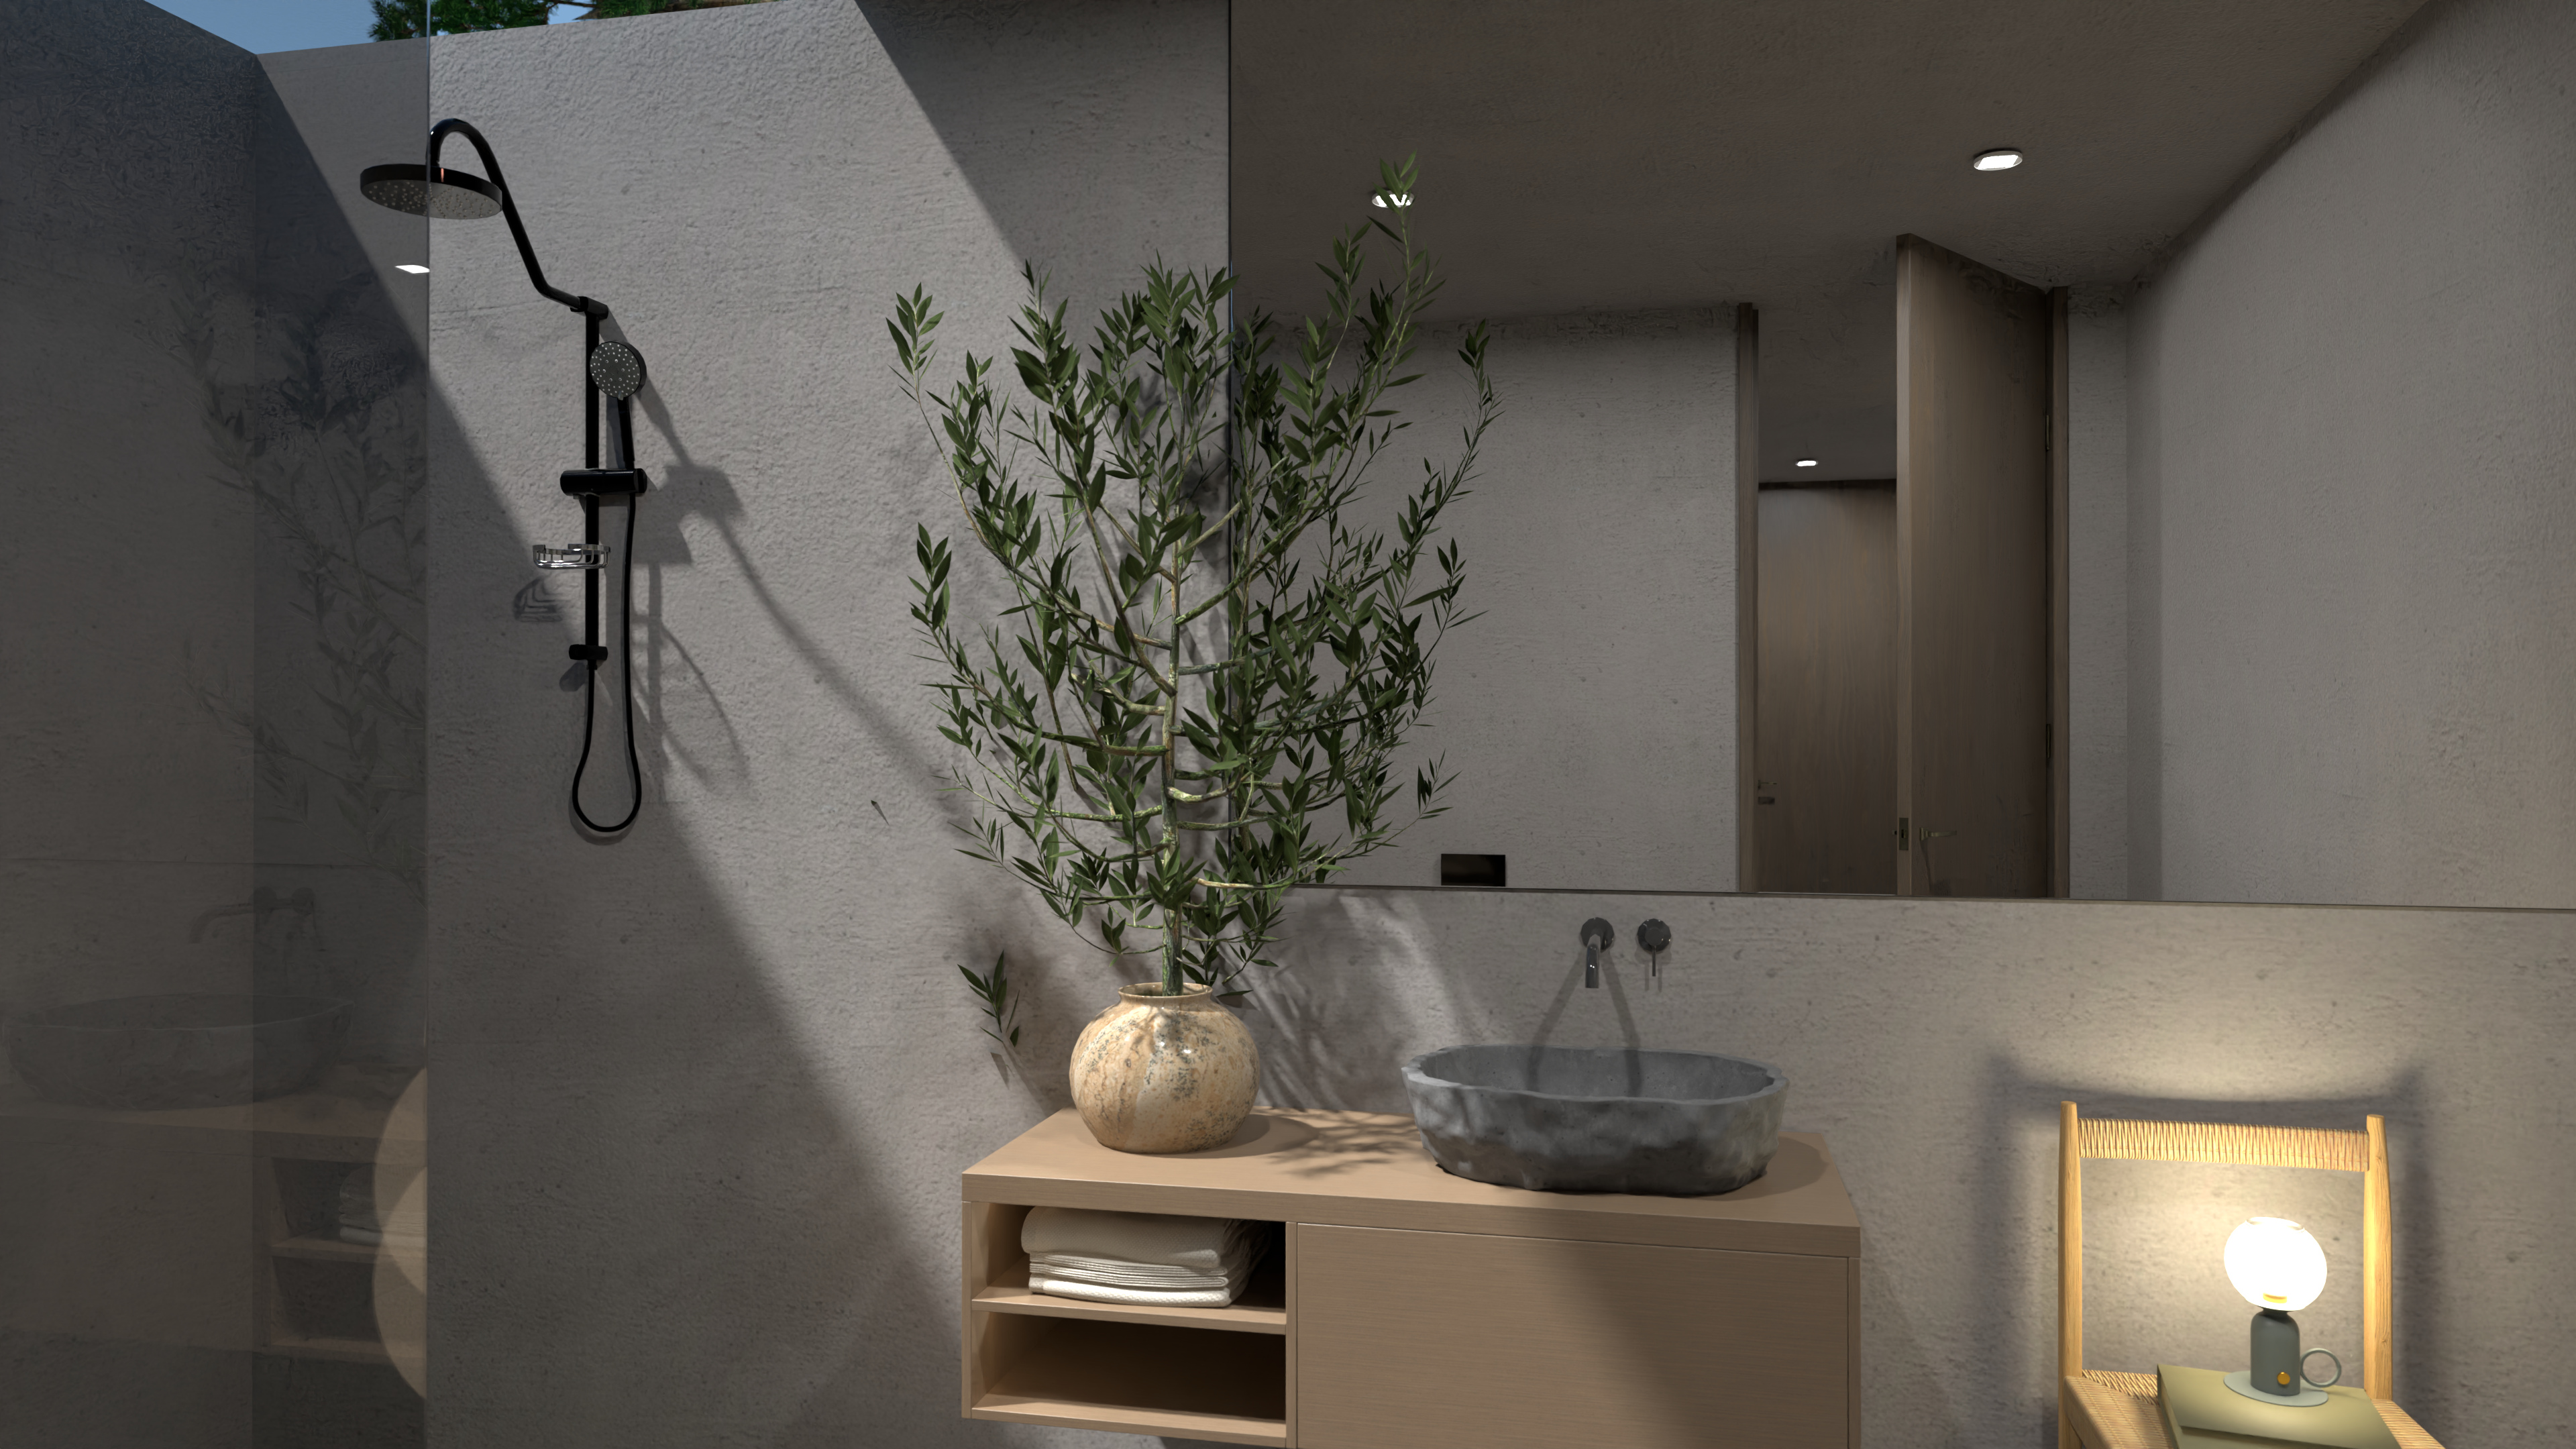 Arizona Modern House - Bathroom 13991135 by Ana G image